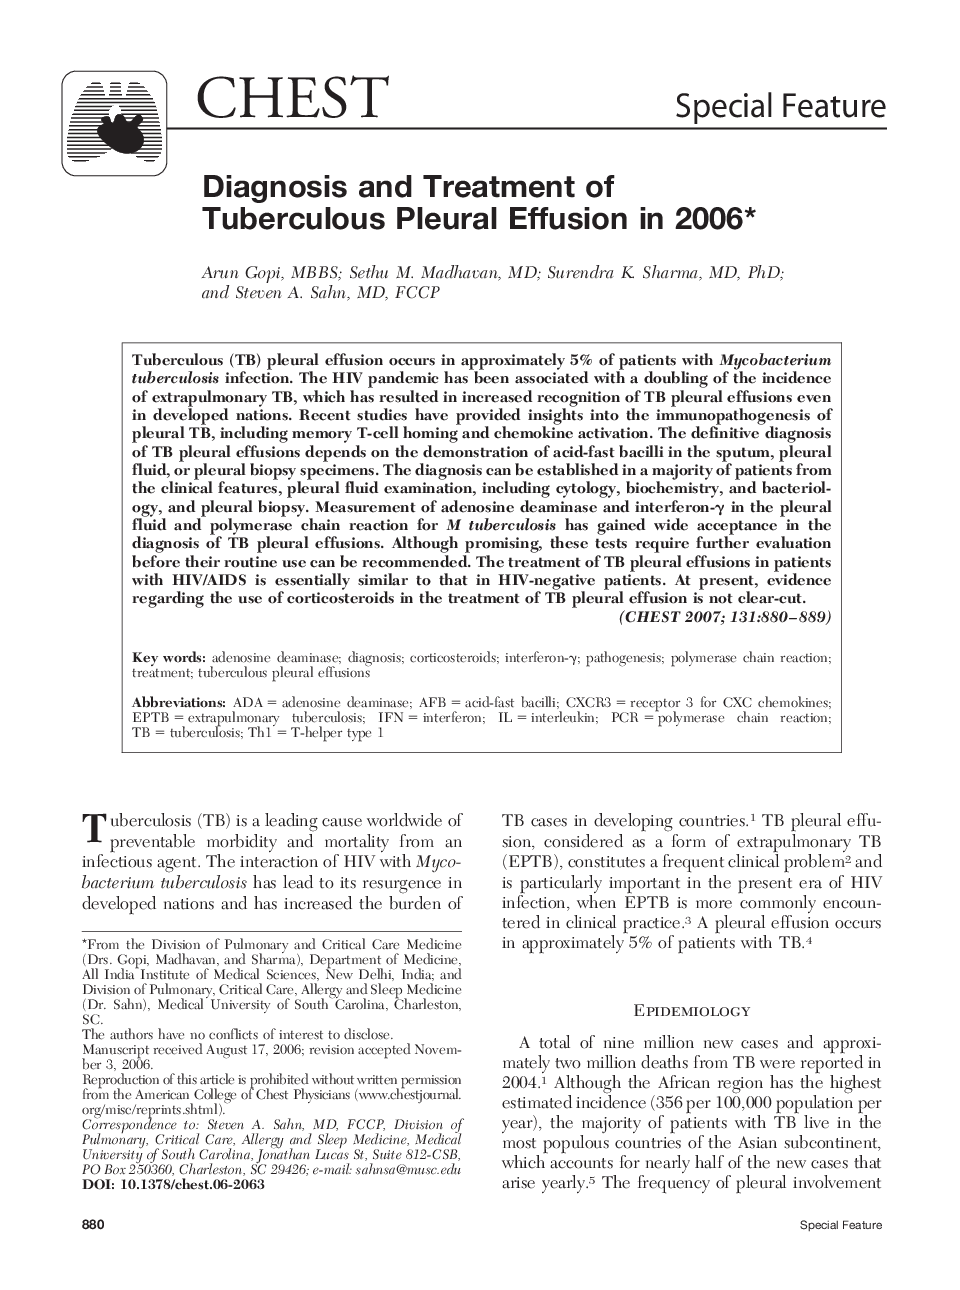 Diagnosis and Treatment of Tuberculous Pleural Effusion in 2006